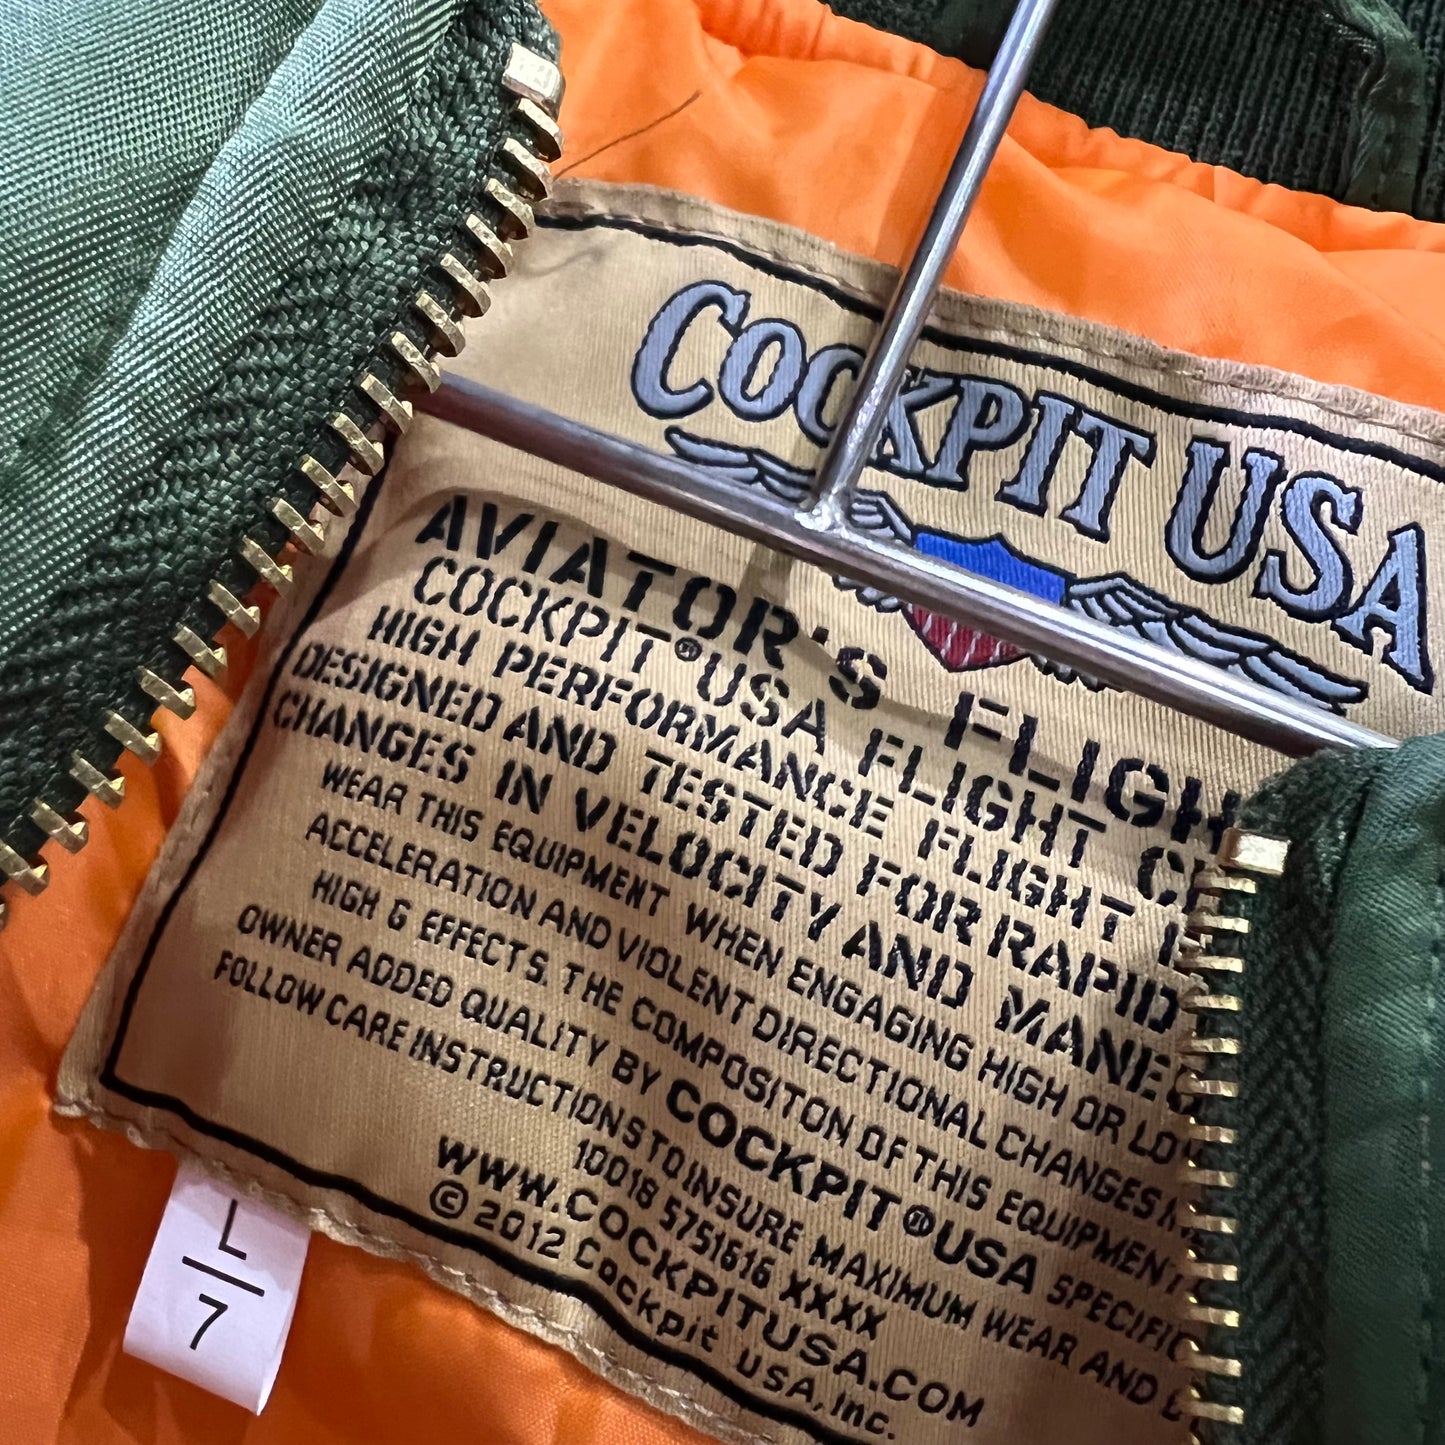 Cockpit USA Kids Top Gun MA-1 Flight Jacket